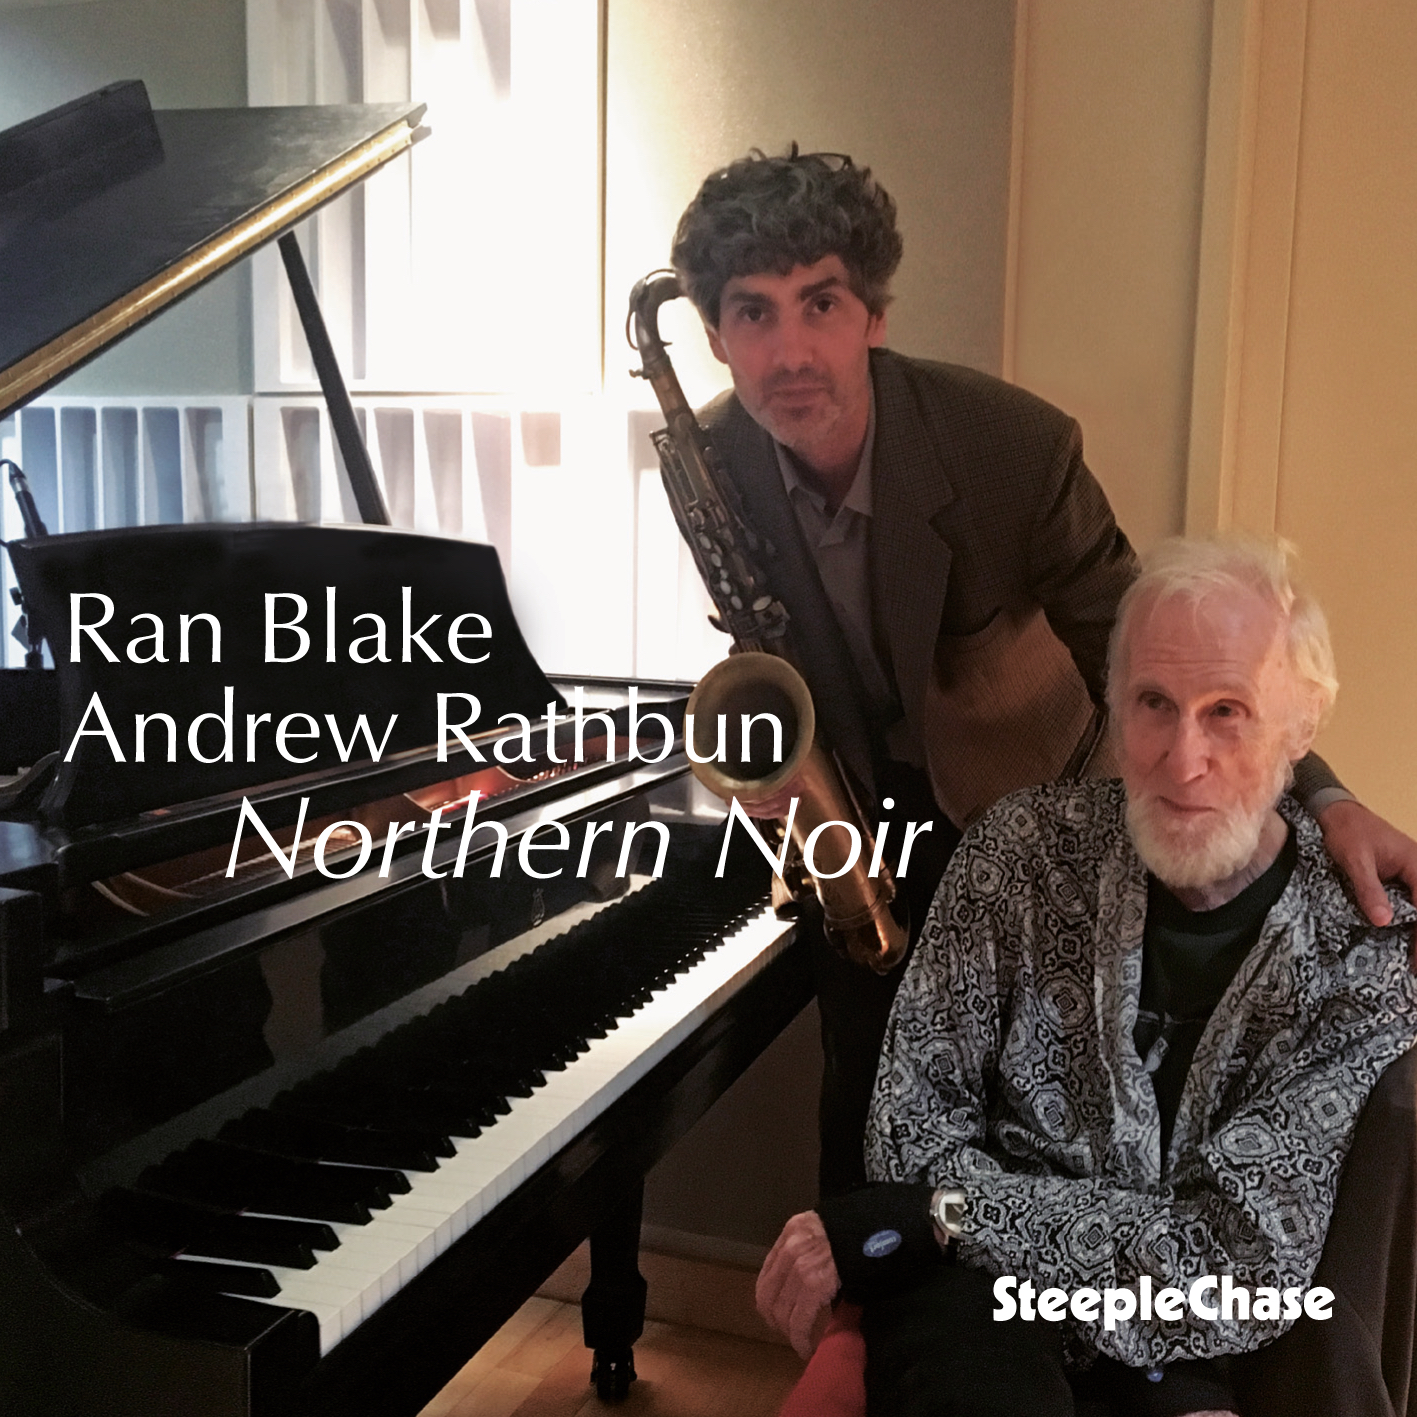 NEW CD with Ran Blake – “Northern Noir”